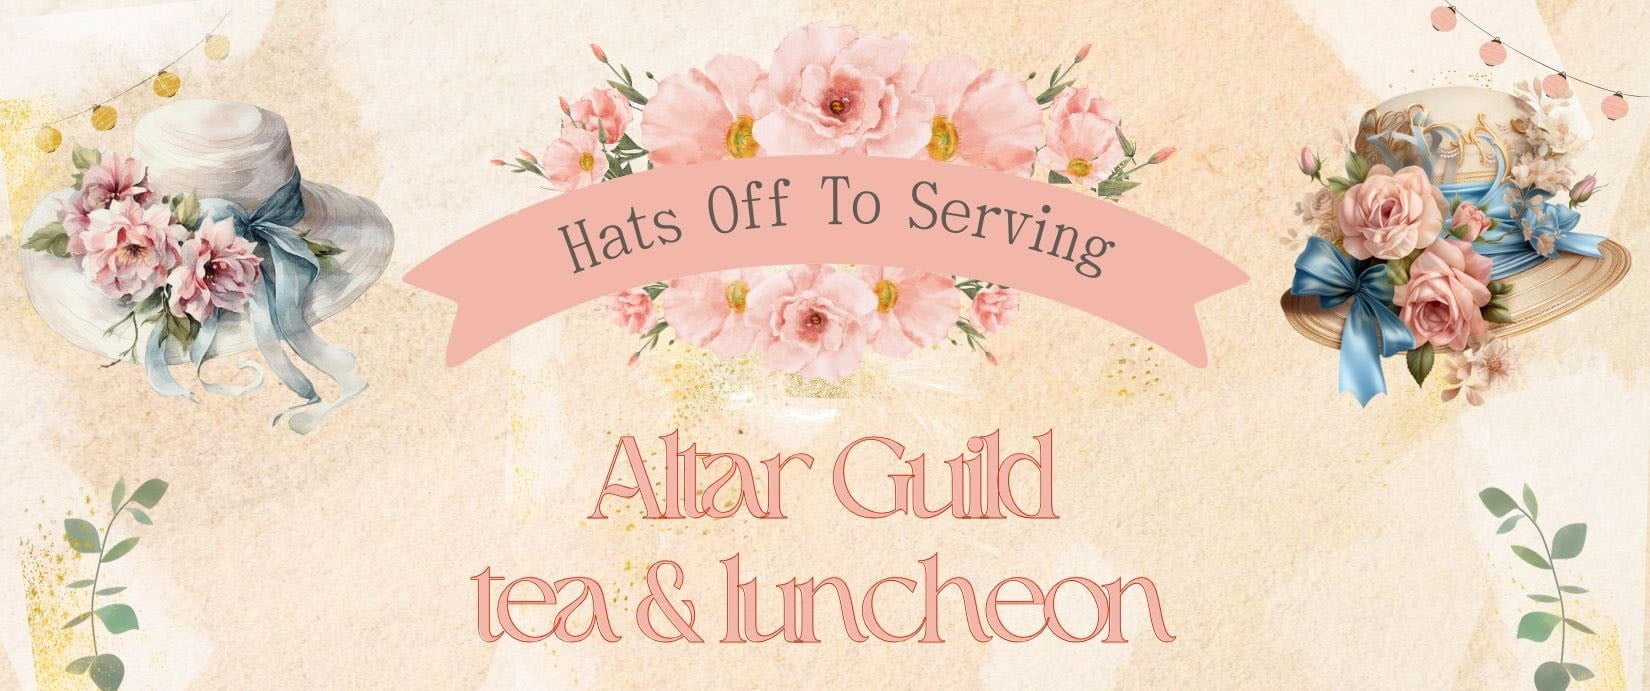 Altar Guild Tea and Luncheon invitation